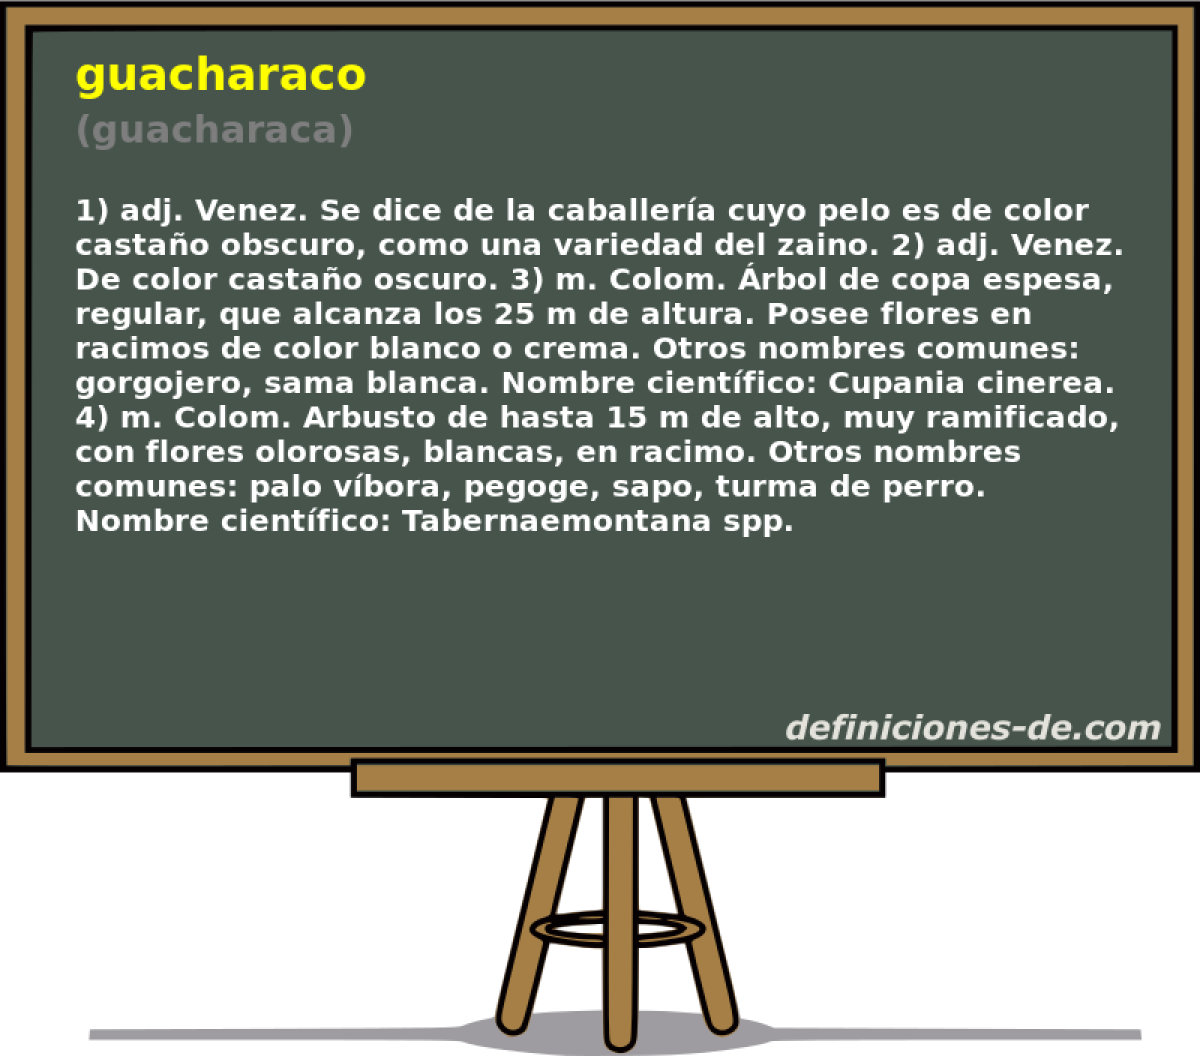 guacharaco (guacharaca)